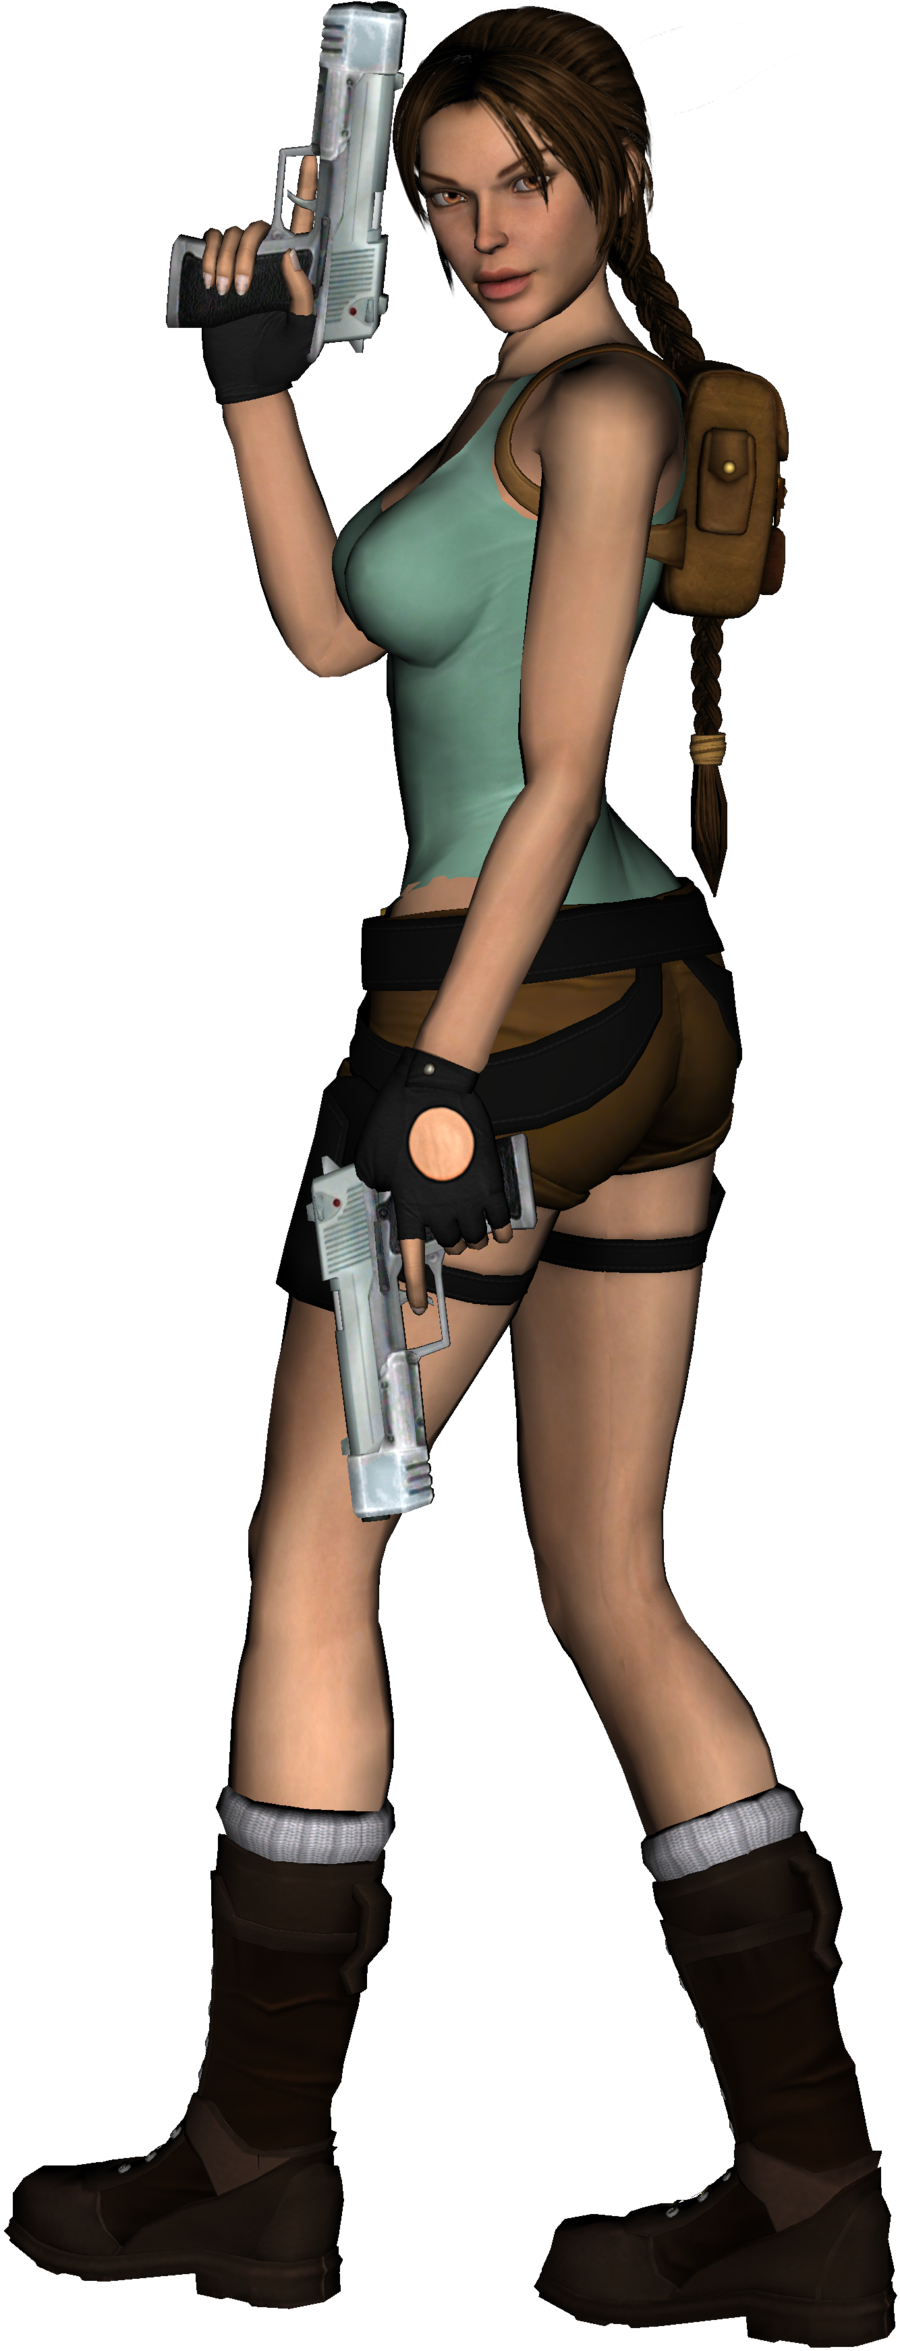 Lara Croft Png - Lara Croft, Transparent background PNG HD thumbnail